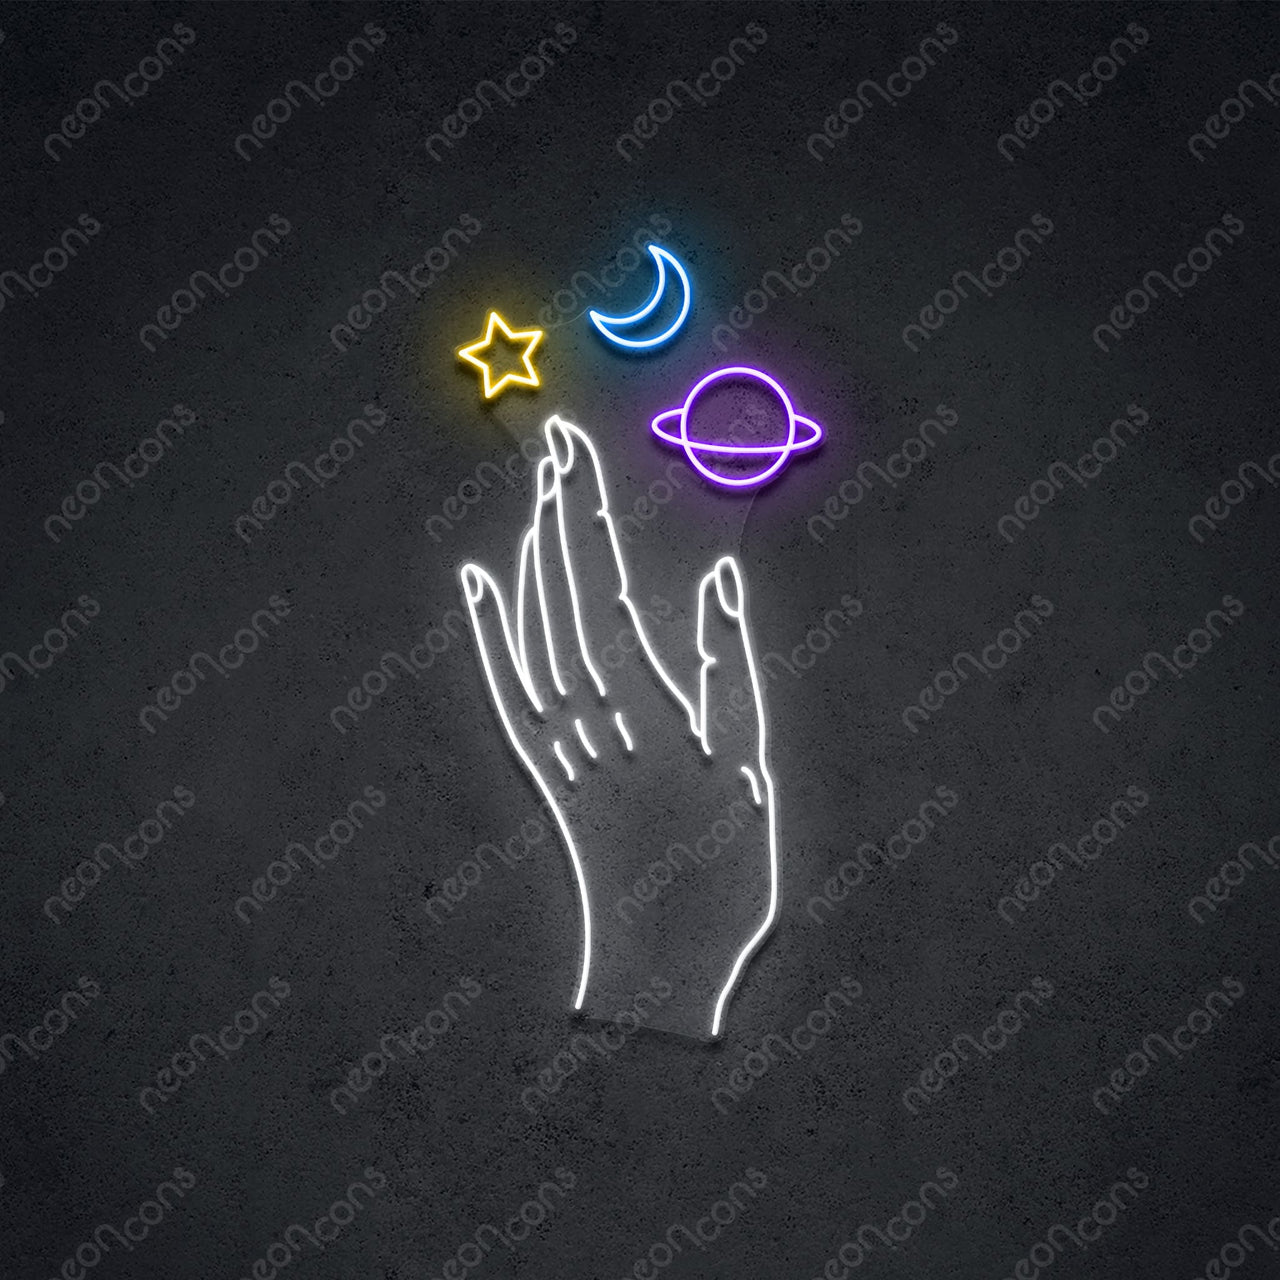 "Galaxy Hand" LED Neon